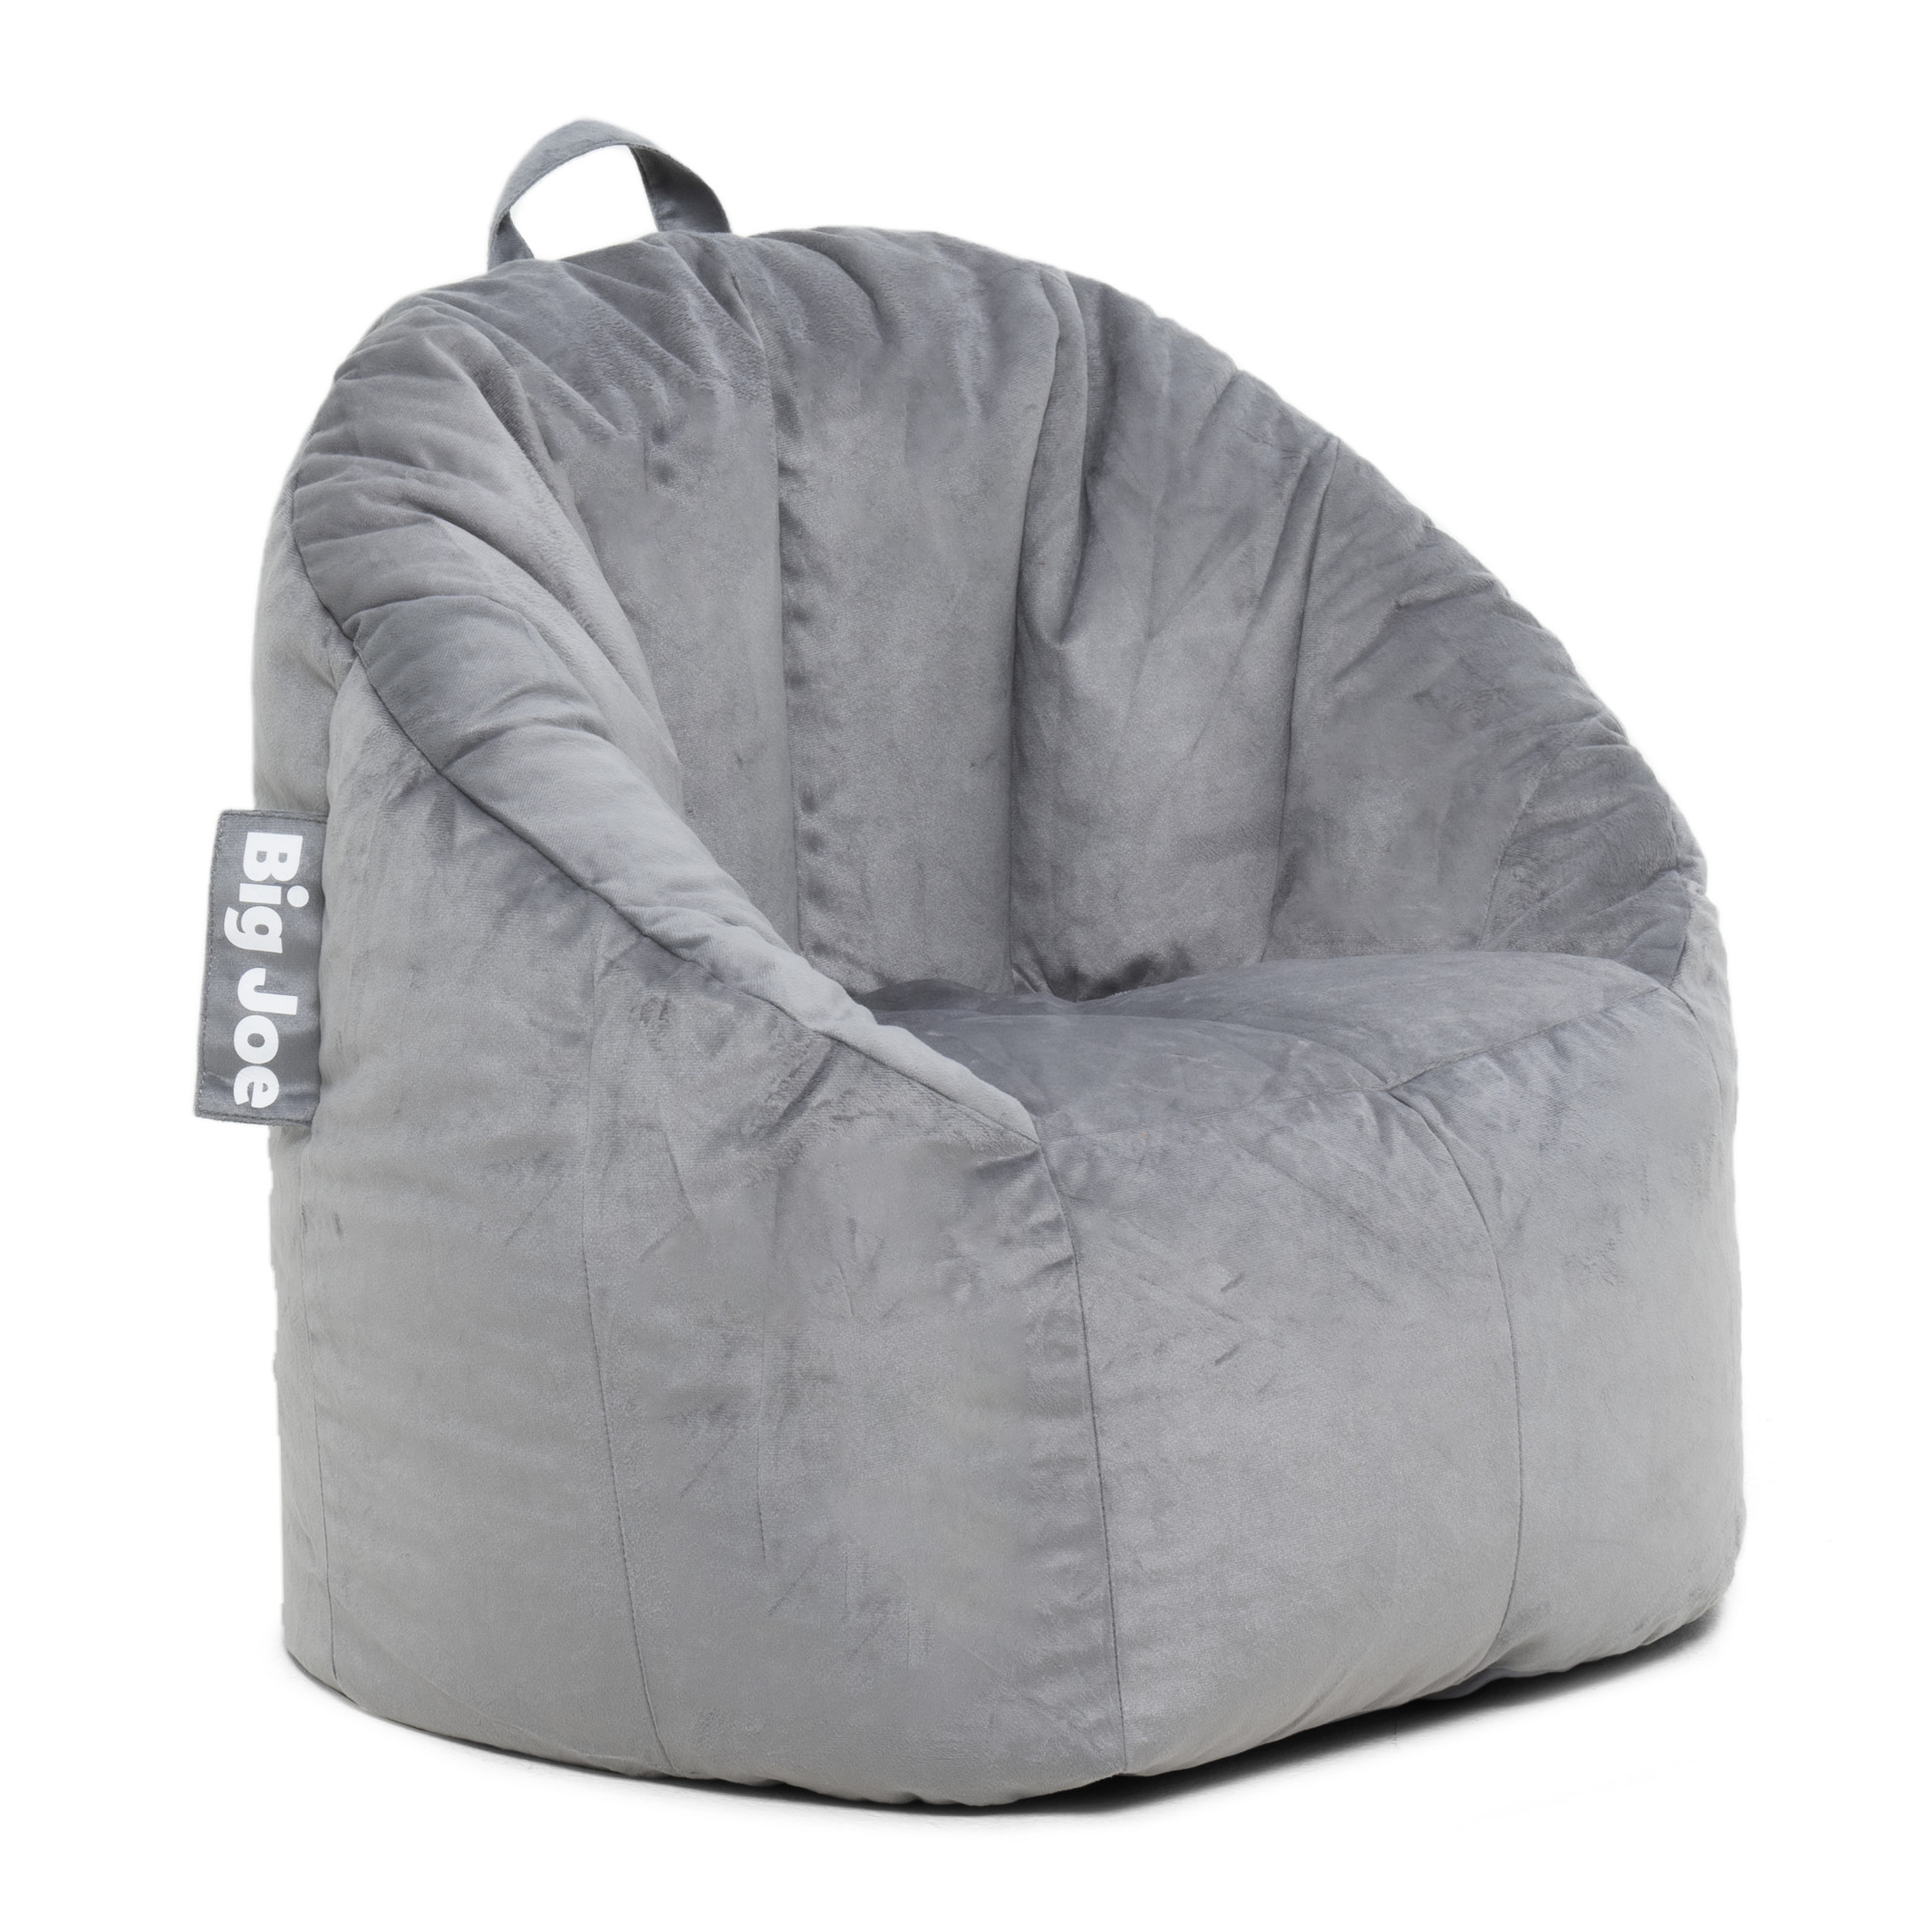 Big Joe Joey Bean Bag Chair, Plush, Kids/Teens, 2.5ft, Gray - image 2 of 9